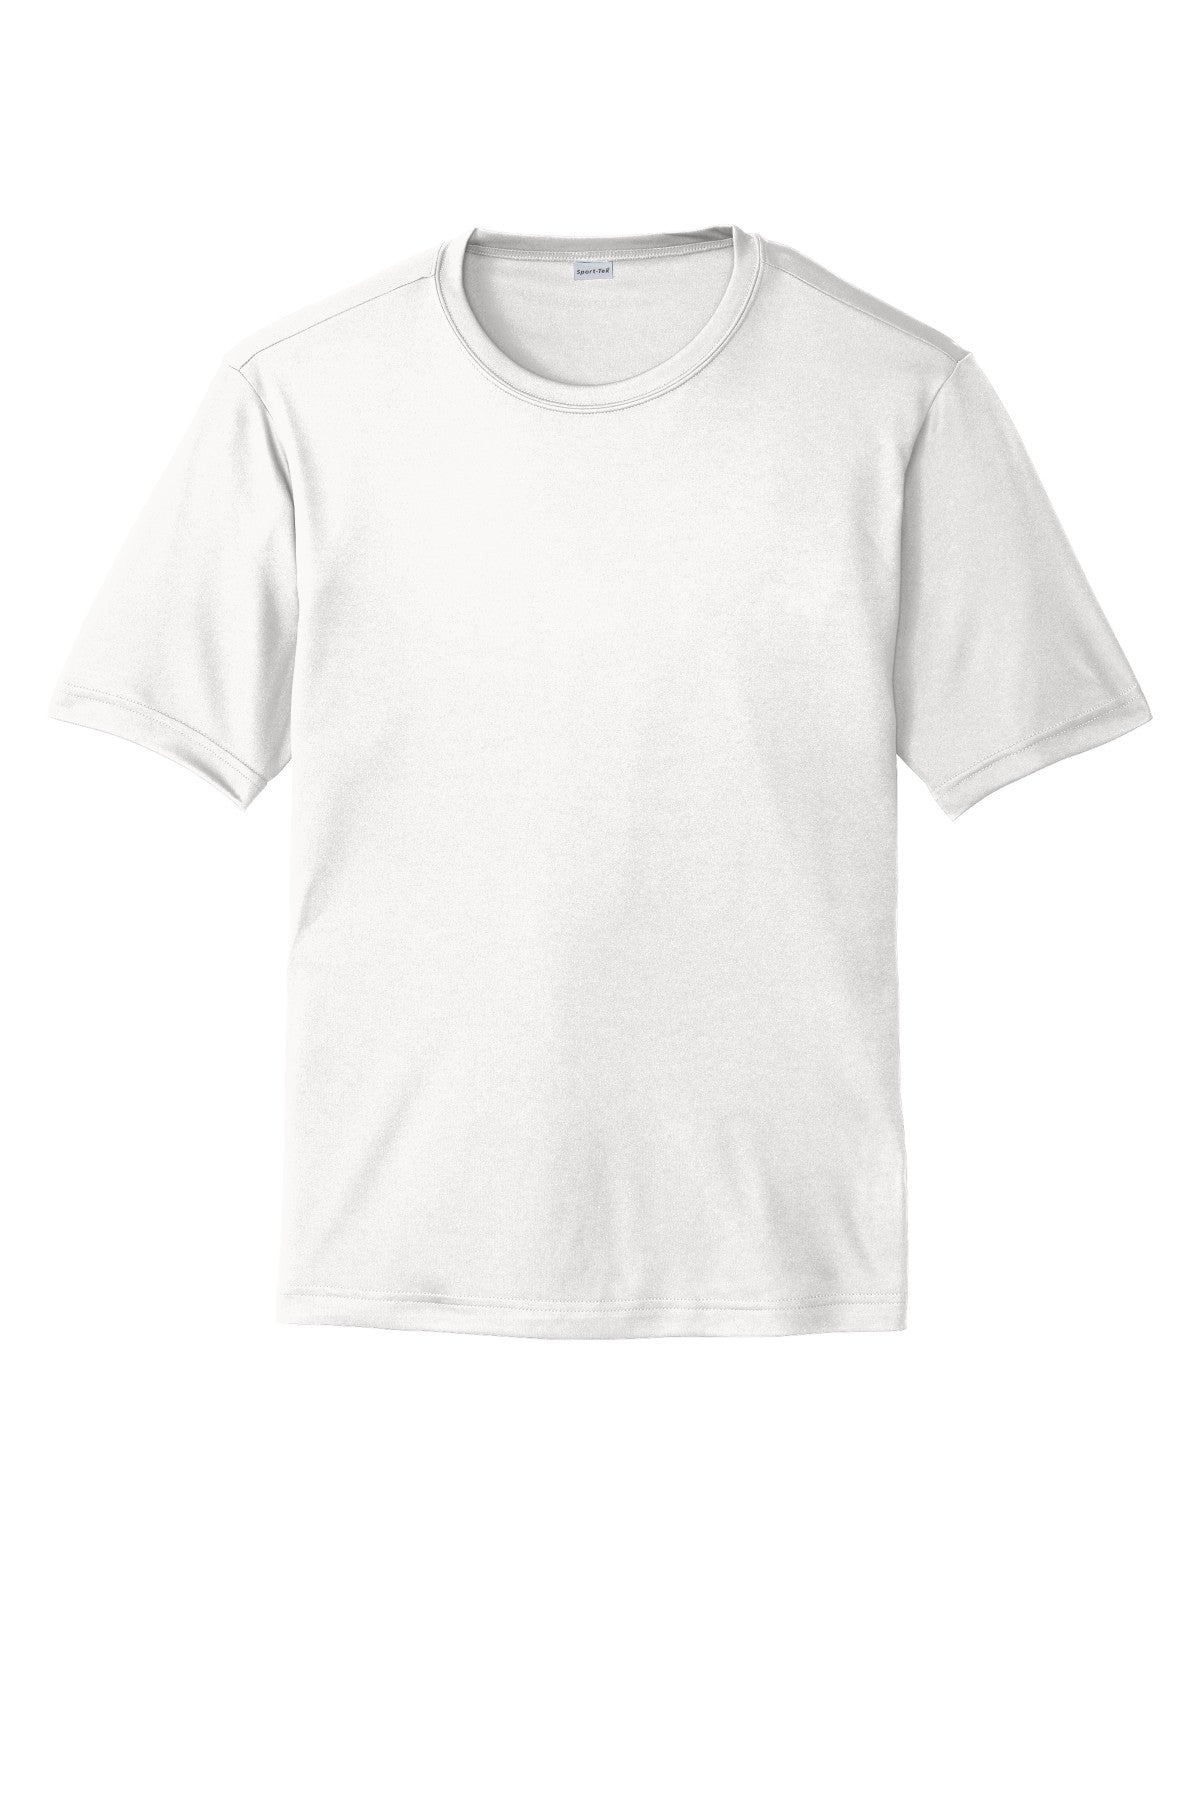 Sport-Tek St350 Polyester Adult T-Shirt Ad Small / White